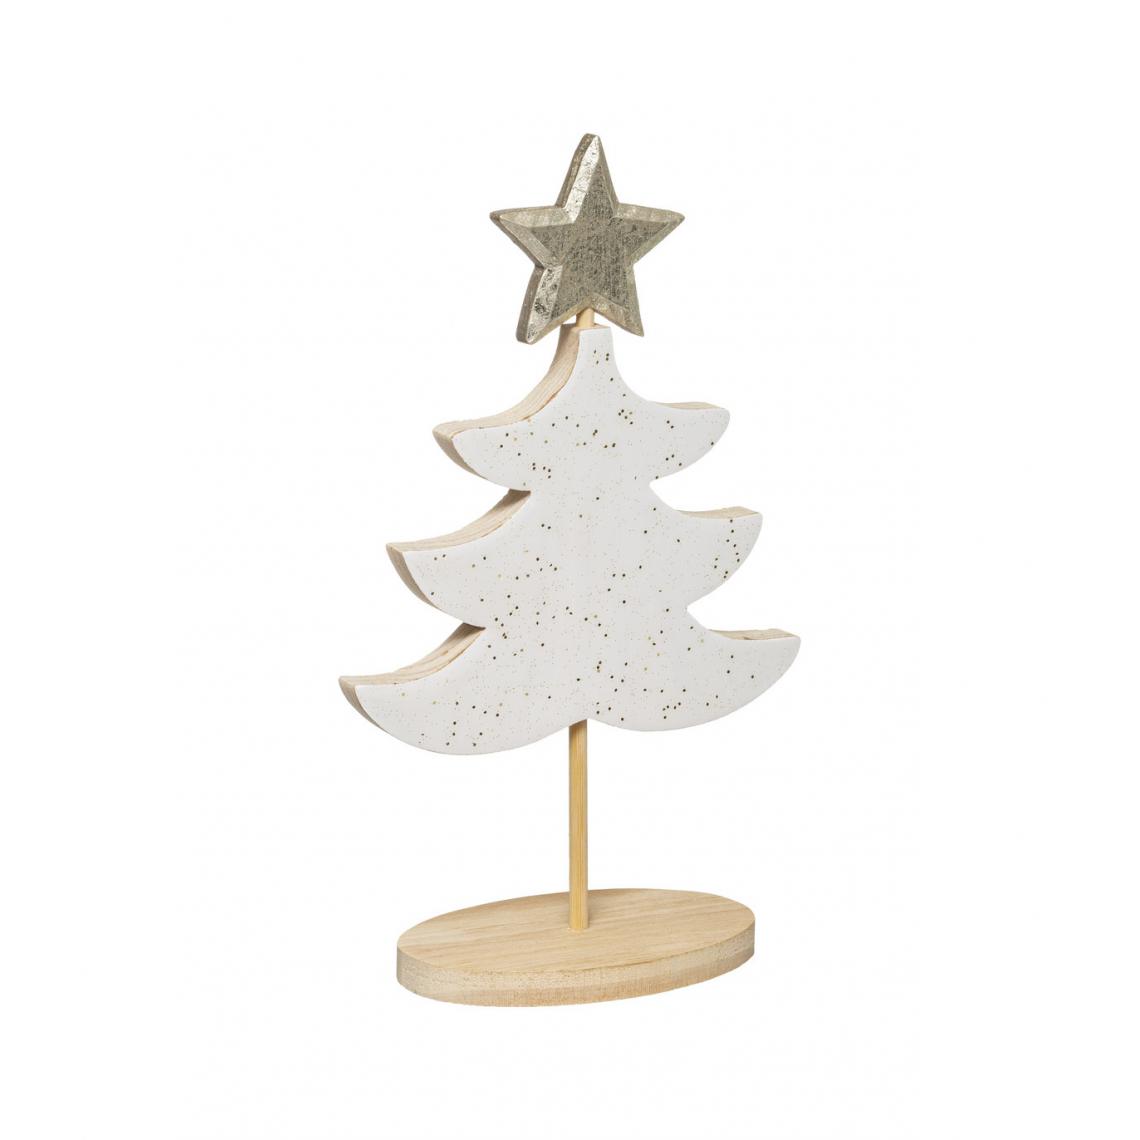 Feeric Lights And Christmas - Feeric Christmas - Sapin de table en bois finition vernis blanc avec étoile dorée H 27 cm - Sapin de Noël